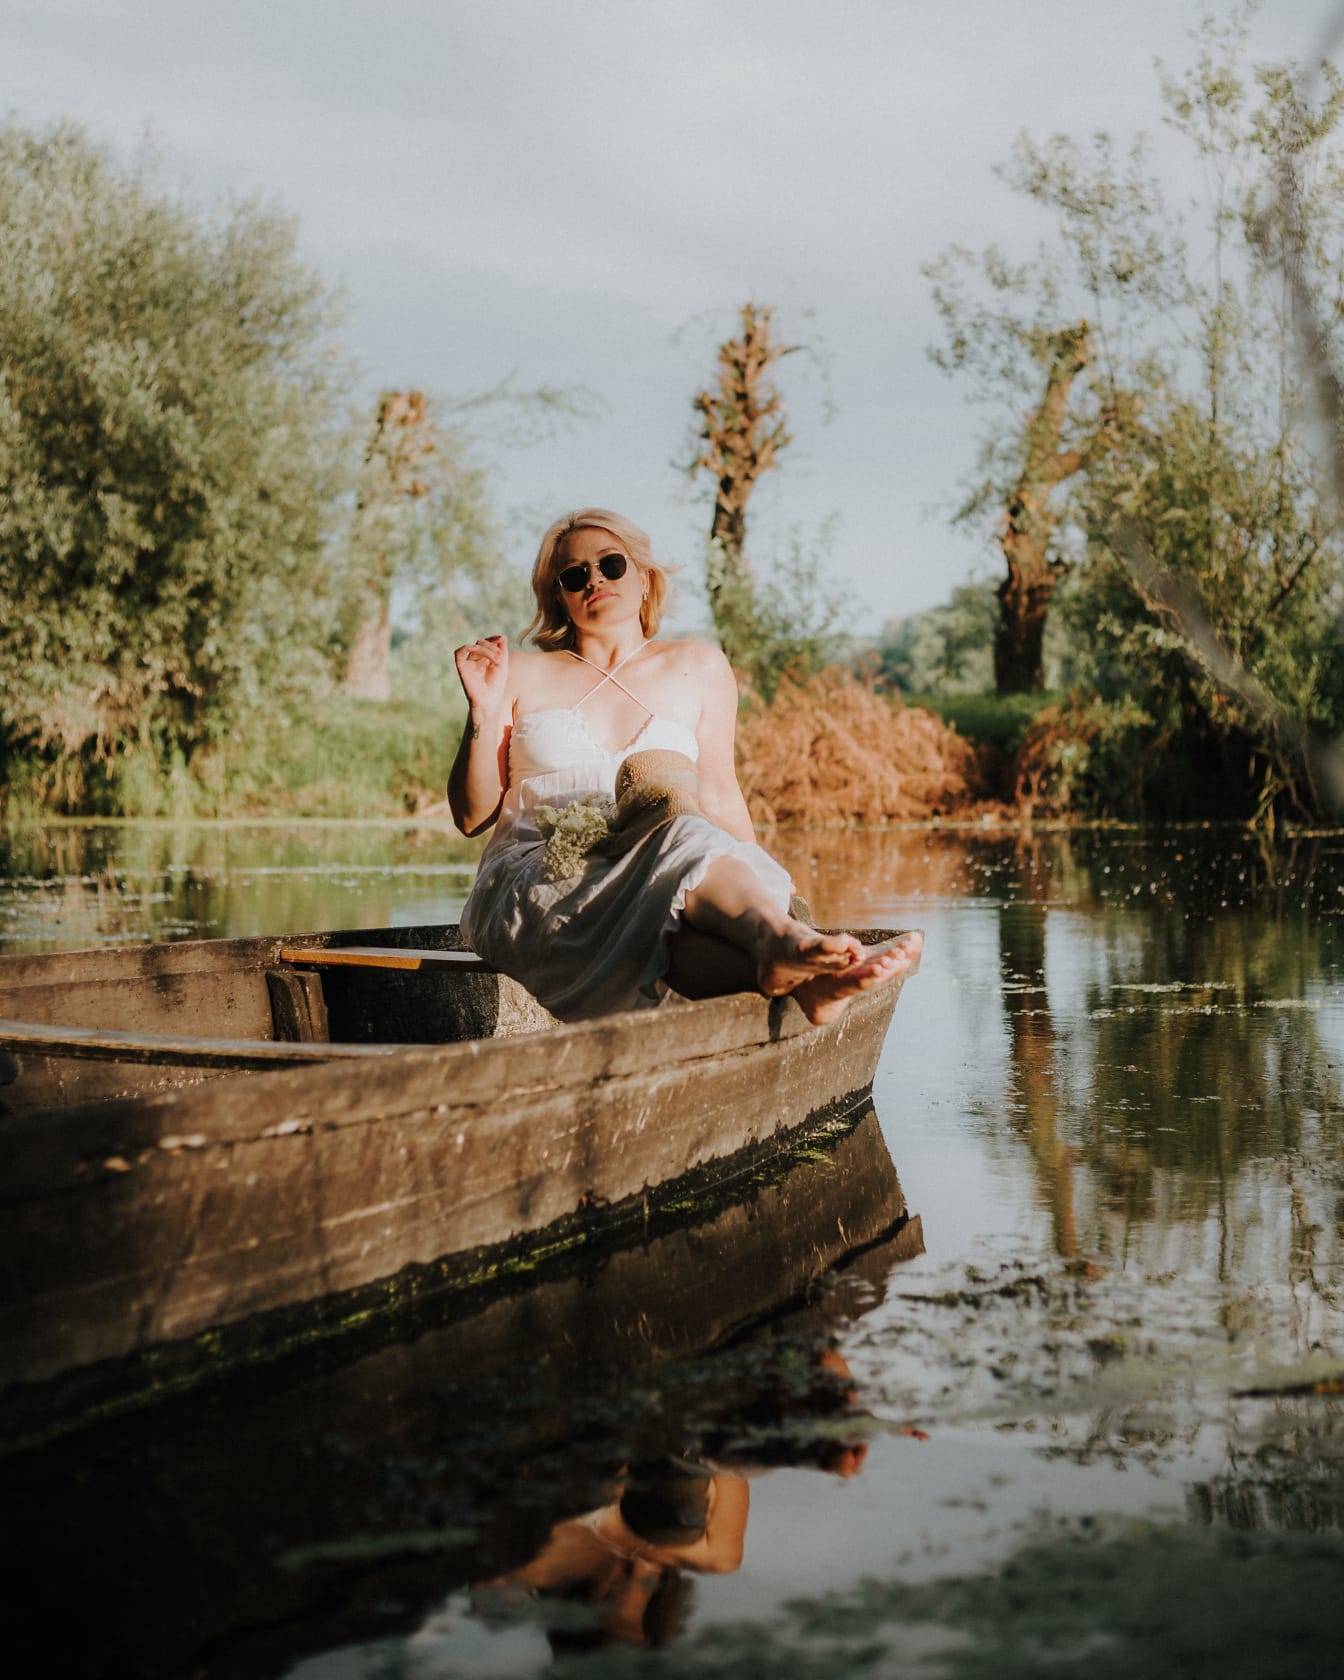 Blondine posiert in Holzboot am Seeufer